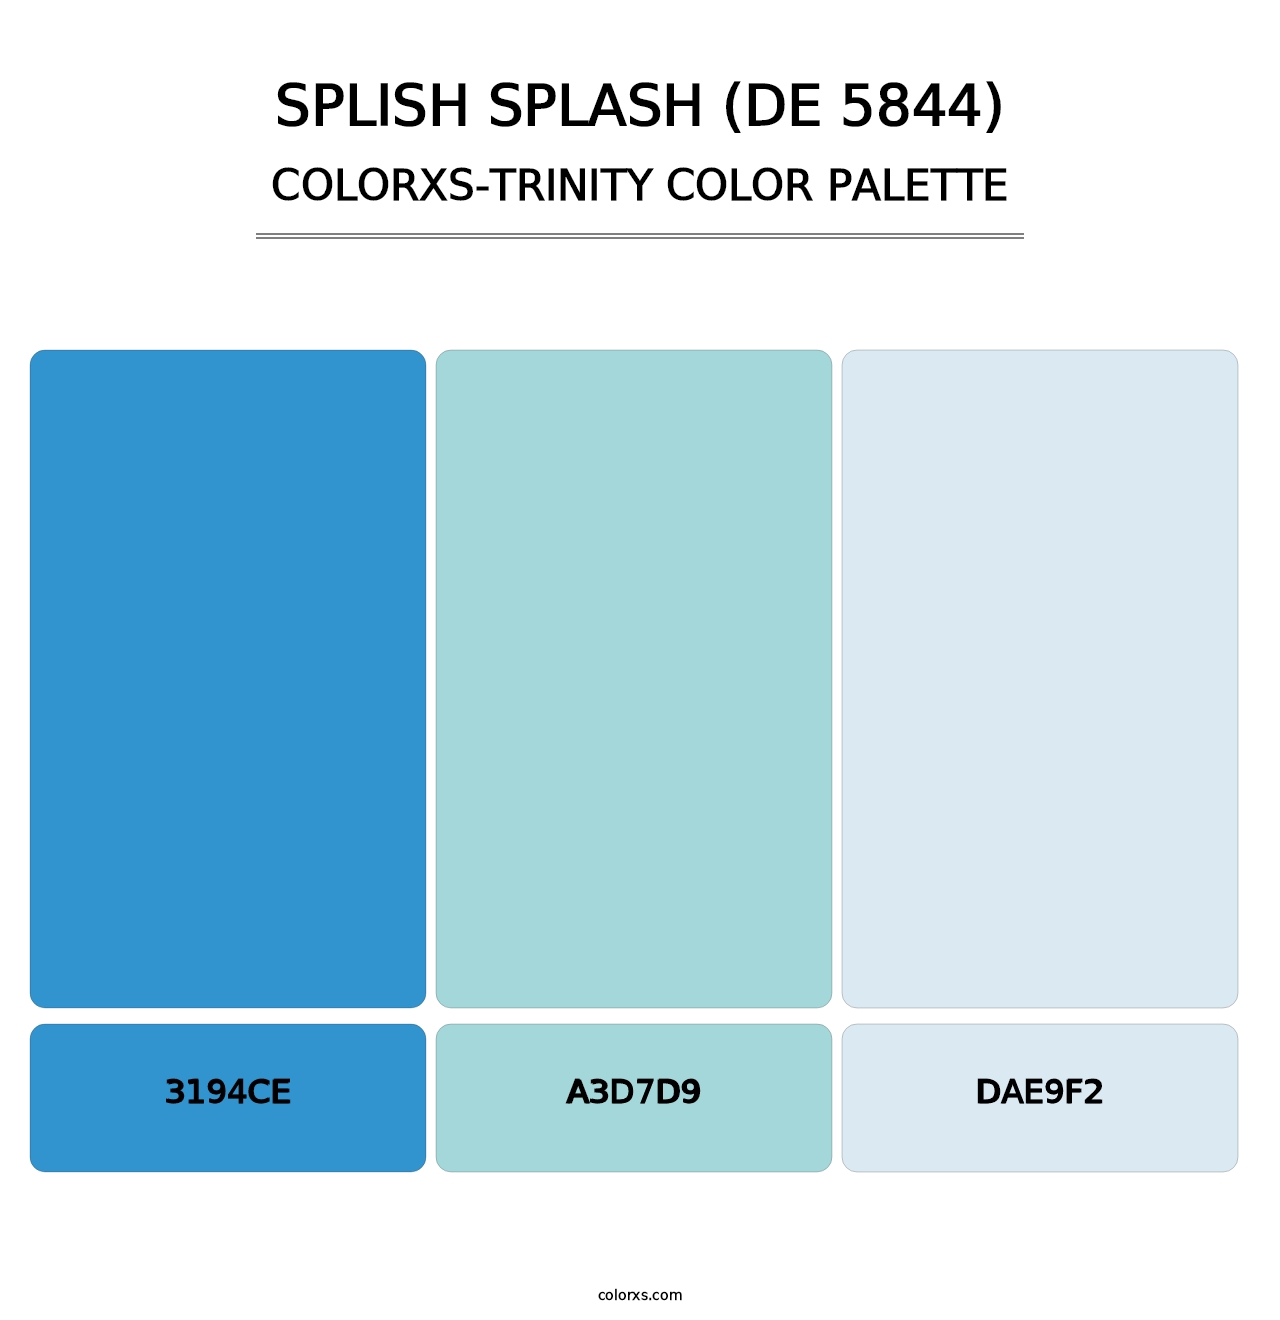 Splish Splash (DE 5844) - Colorxs Trinity Palette